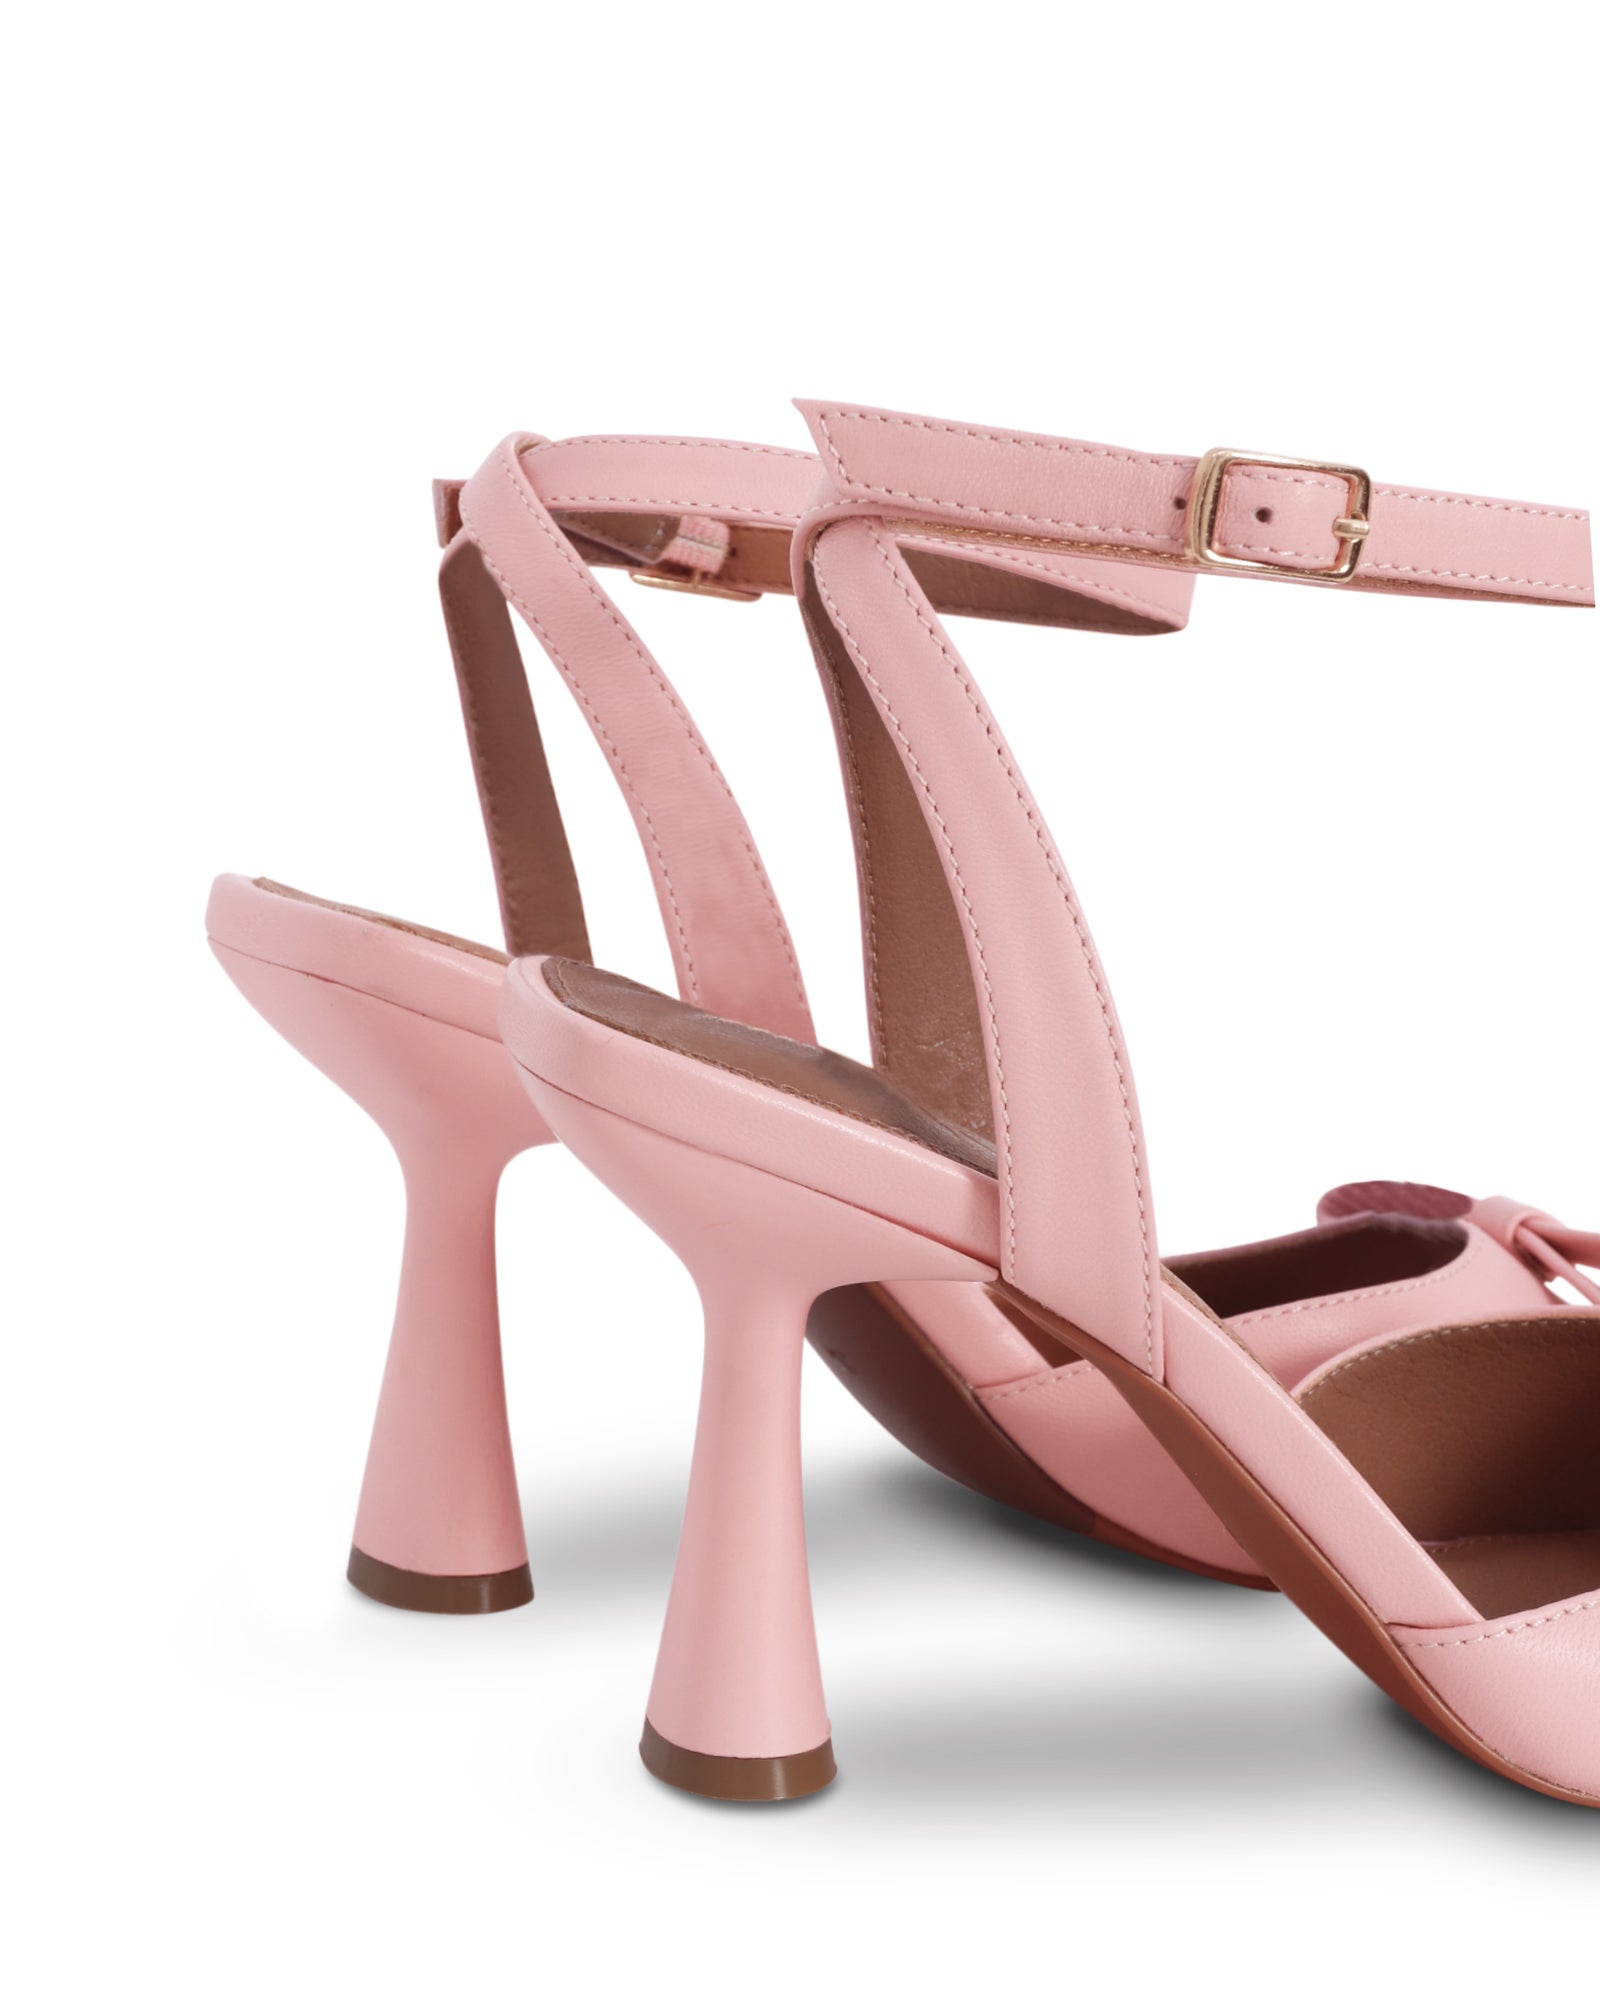 Tuscany Pink 9cm Heel